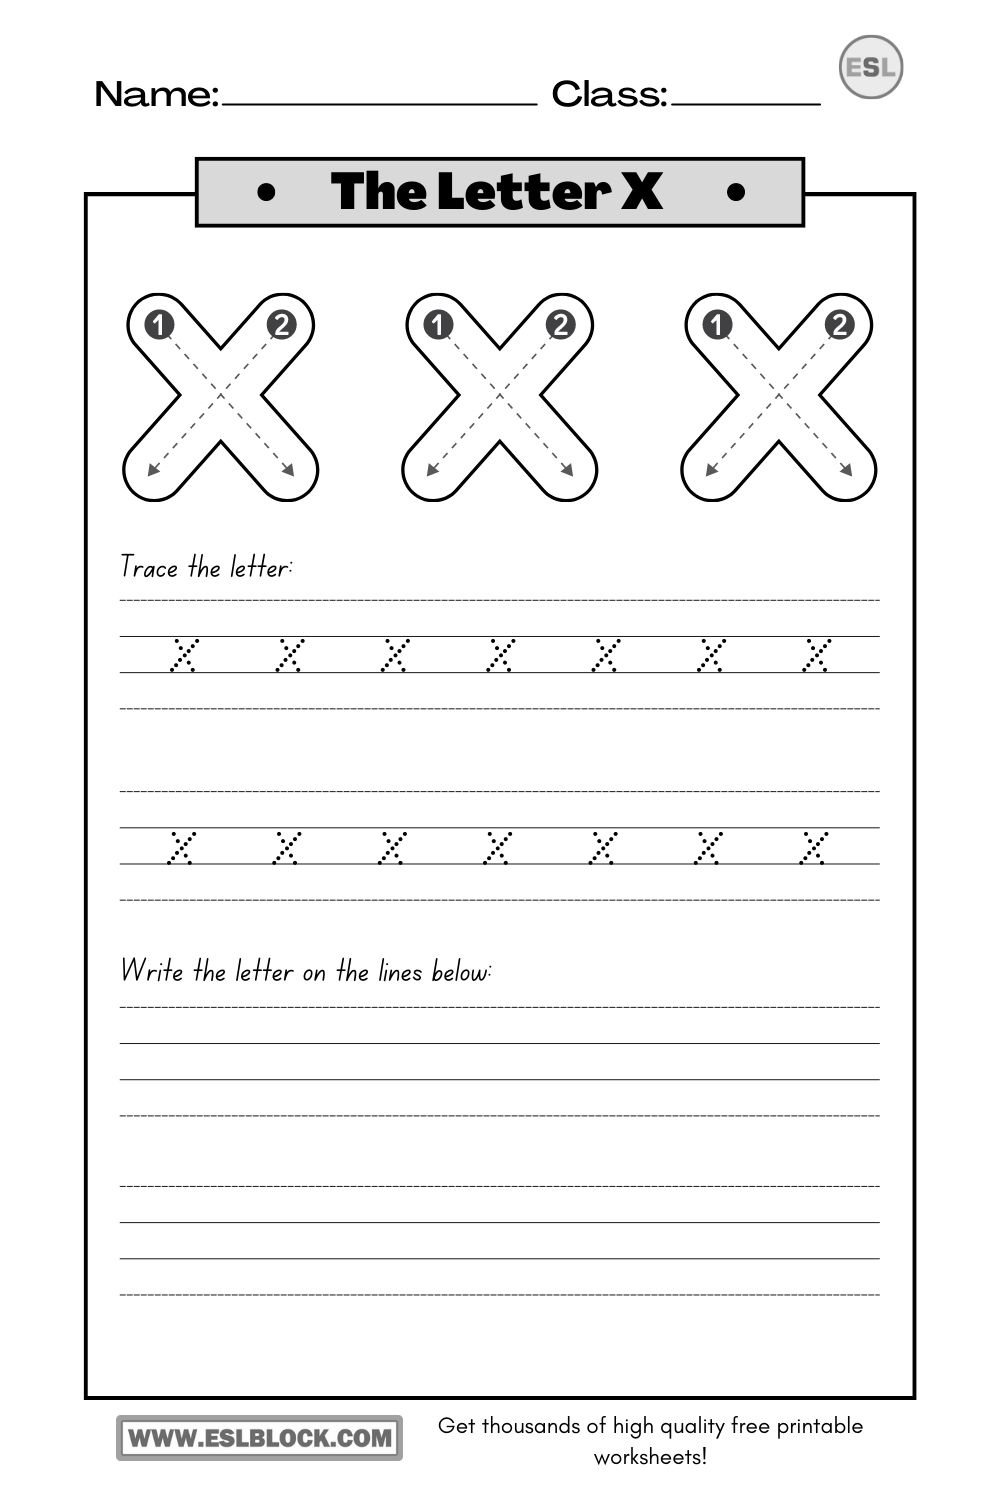 Alphabet X Printable Worksheets, Free Worksheets, Kindergarten Worksheets, Letter X Printable Worksheets, Preschool Worksheets, Tracing the Letter X, Tracing the letter X Printable, Tracing the Letter X Worksheets, Tracing Worksheets, Worksheets